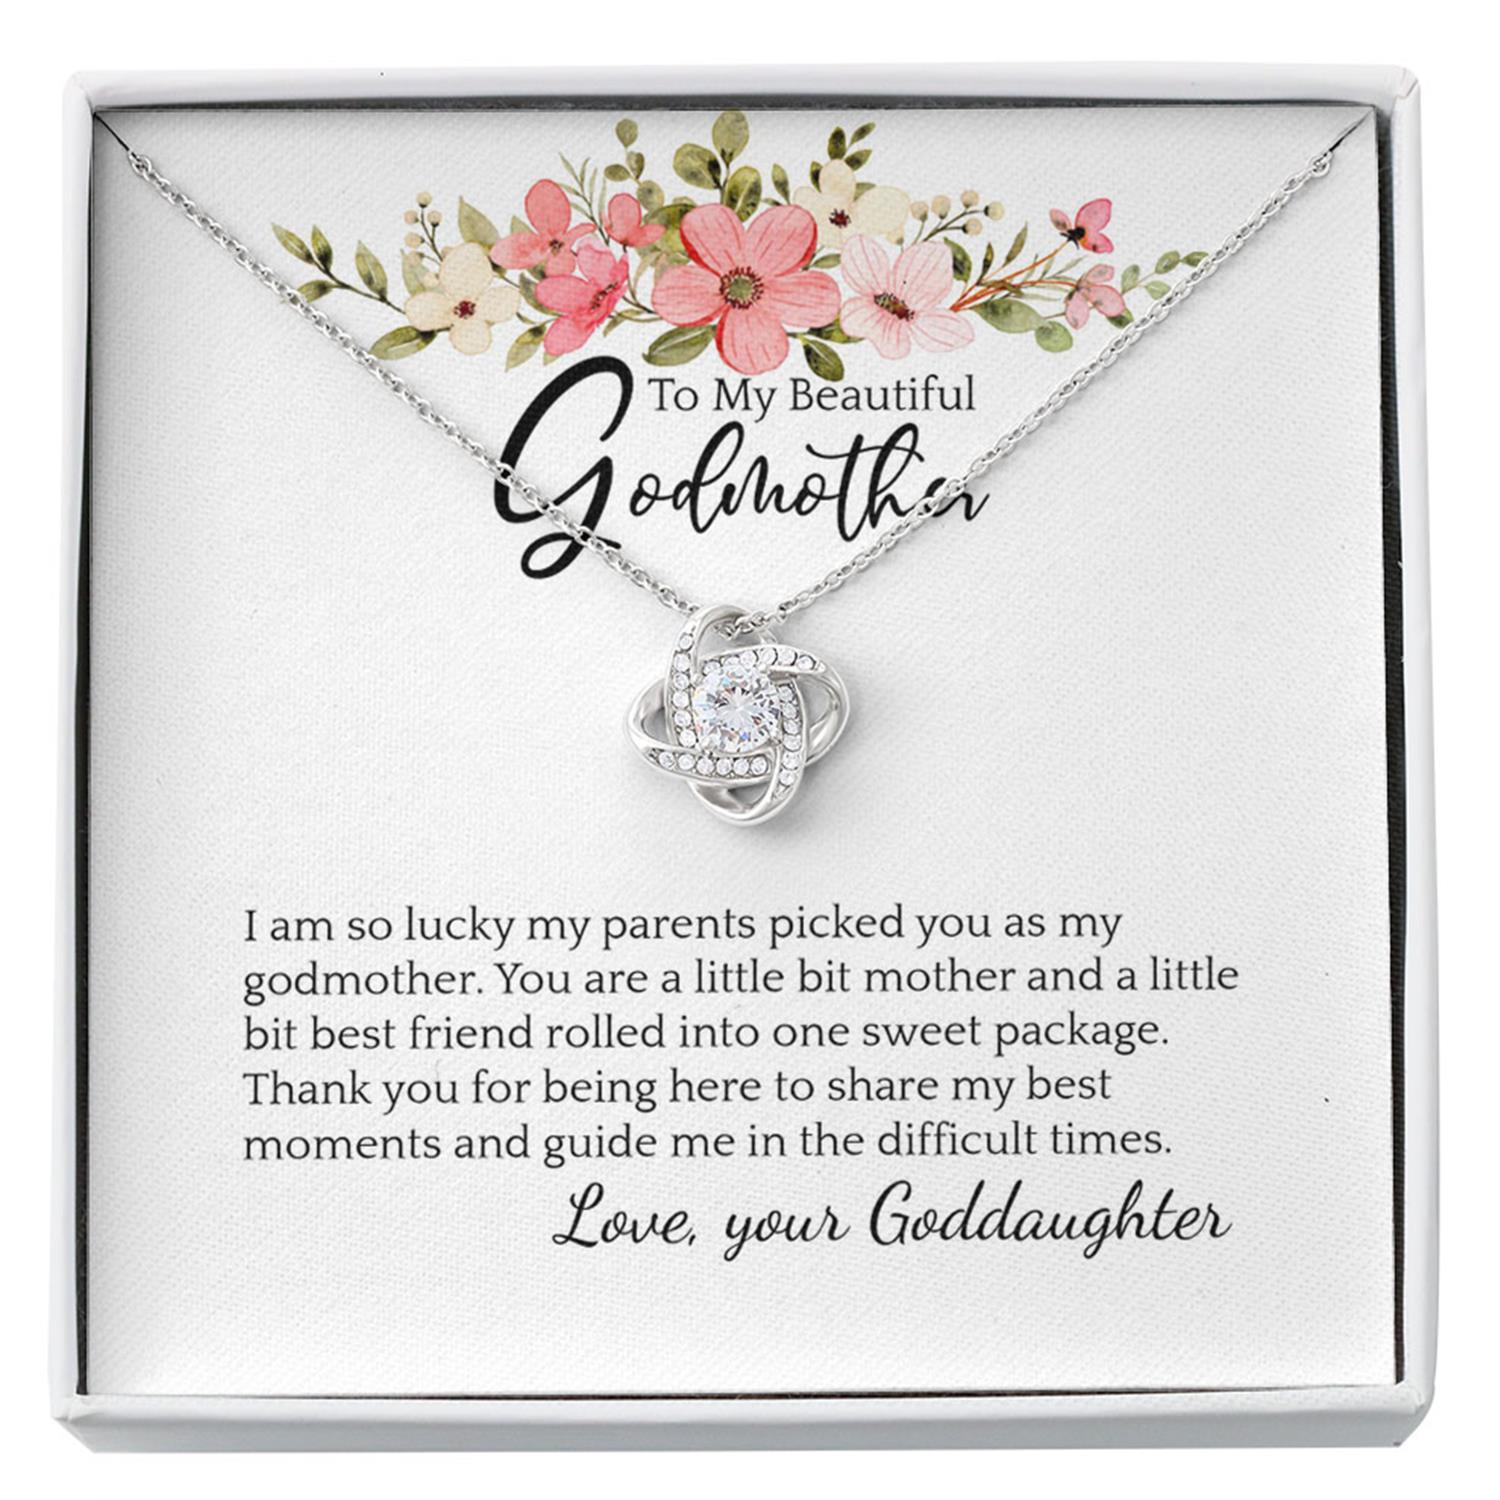 Godmother Necklace Godmother Message Card Thank You Godmother Sentimental Necklace Card Godmother Christmas Custom Necklace